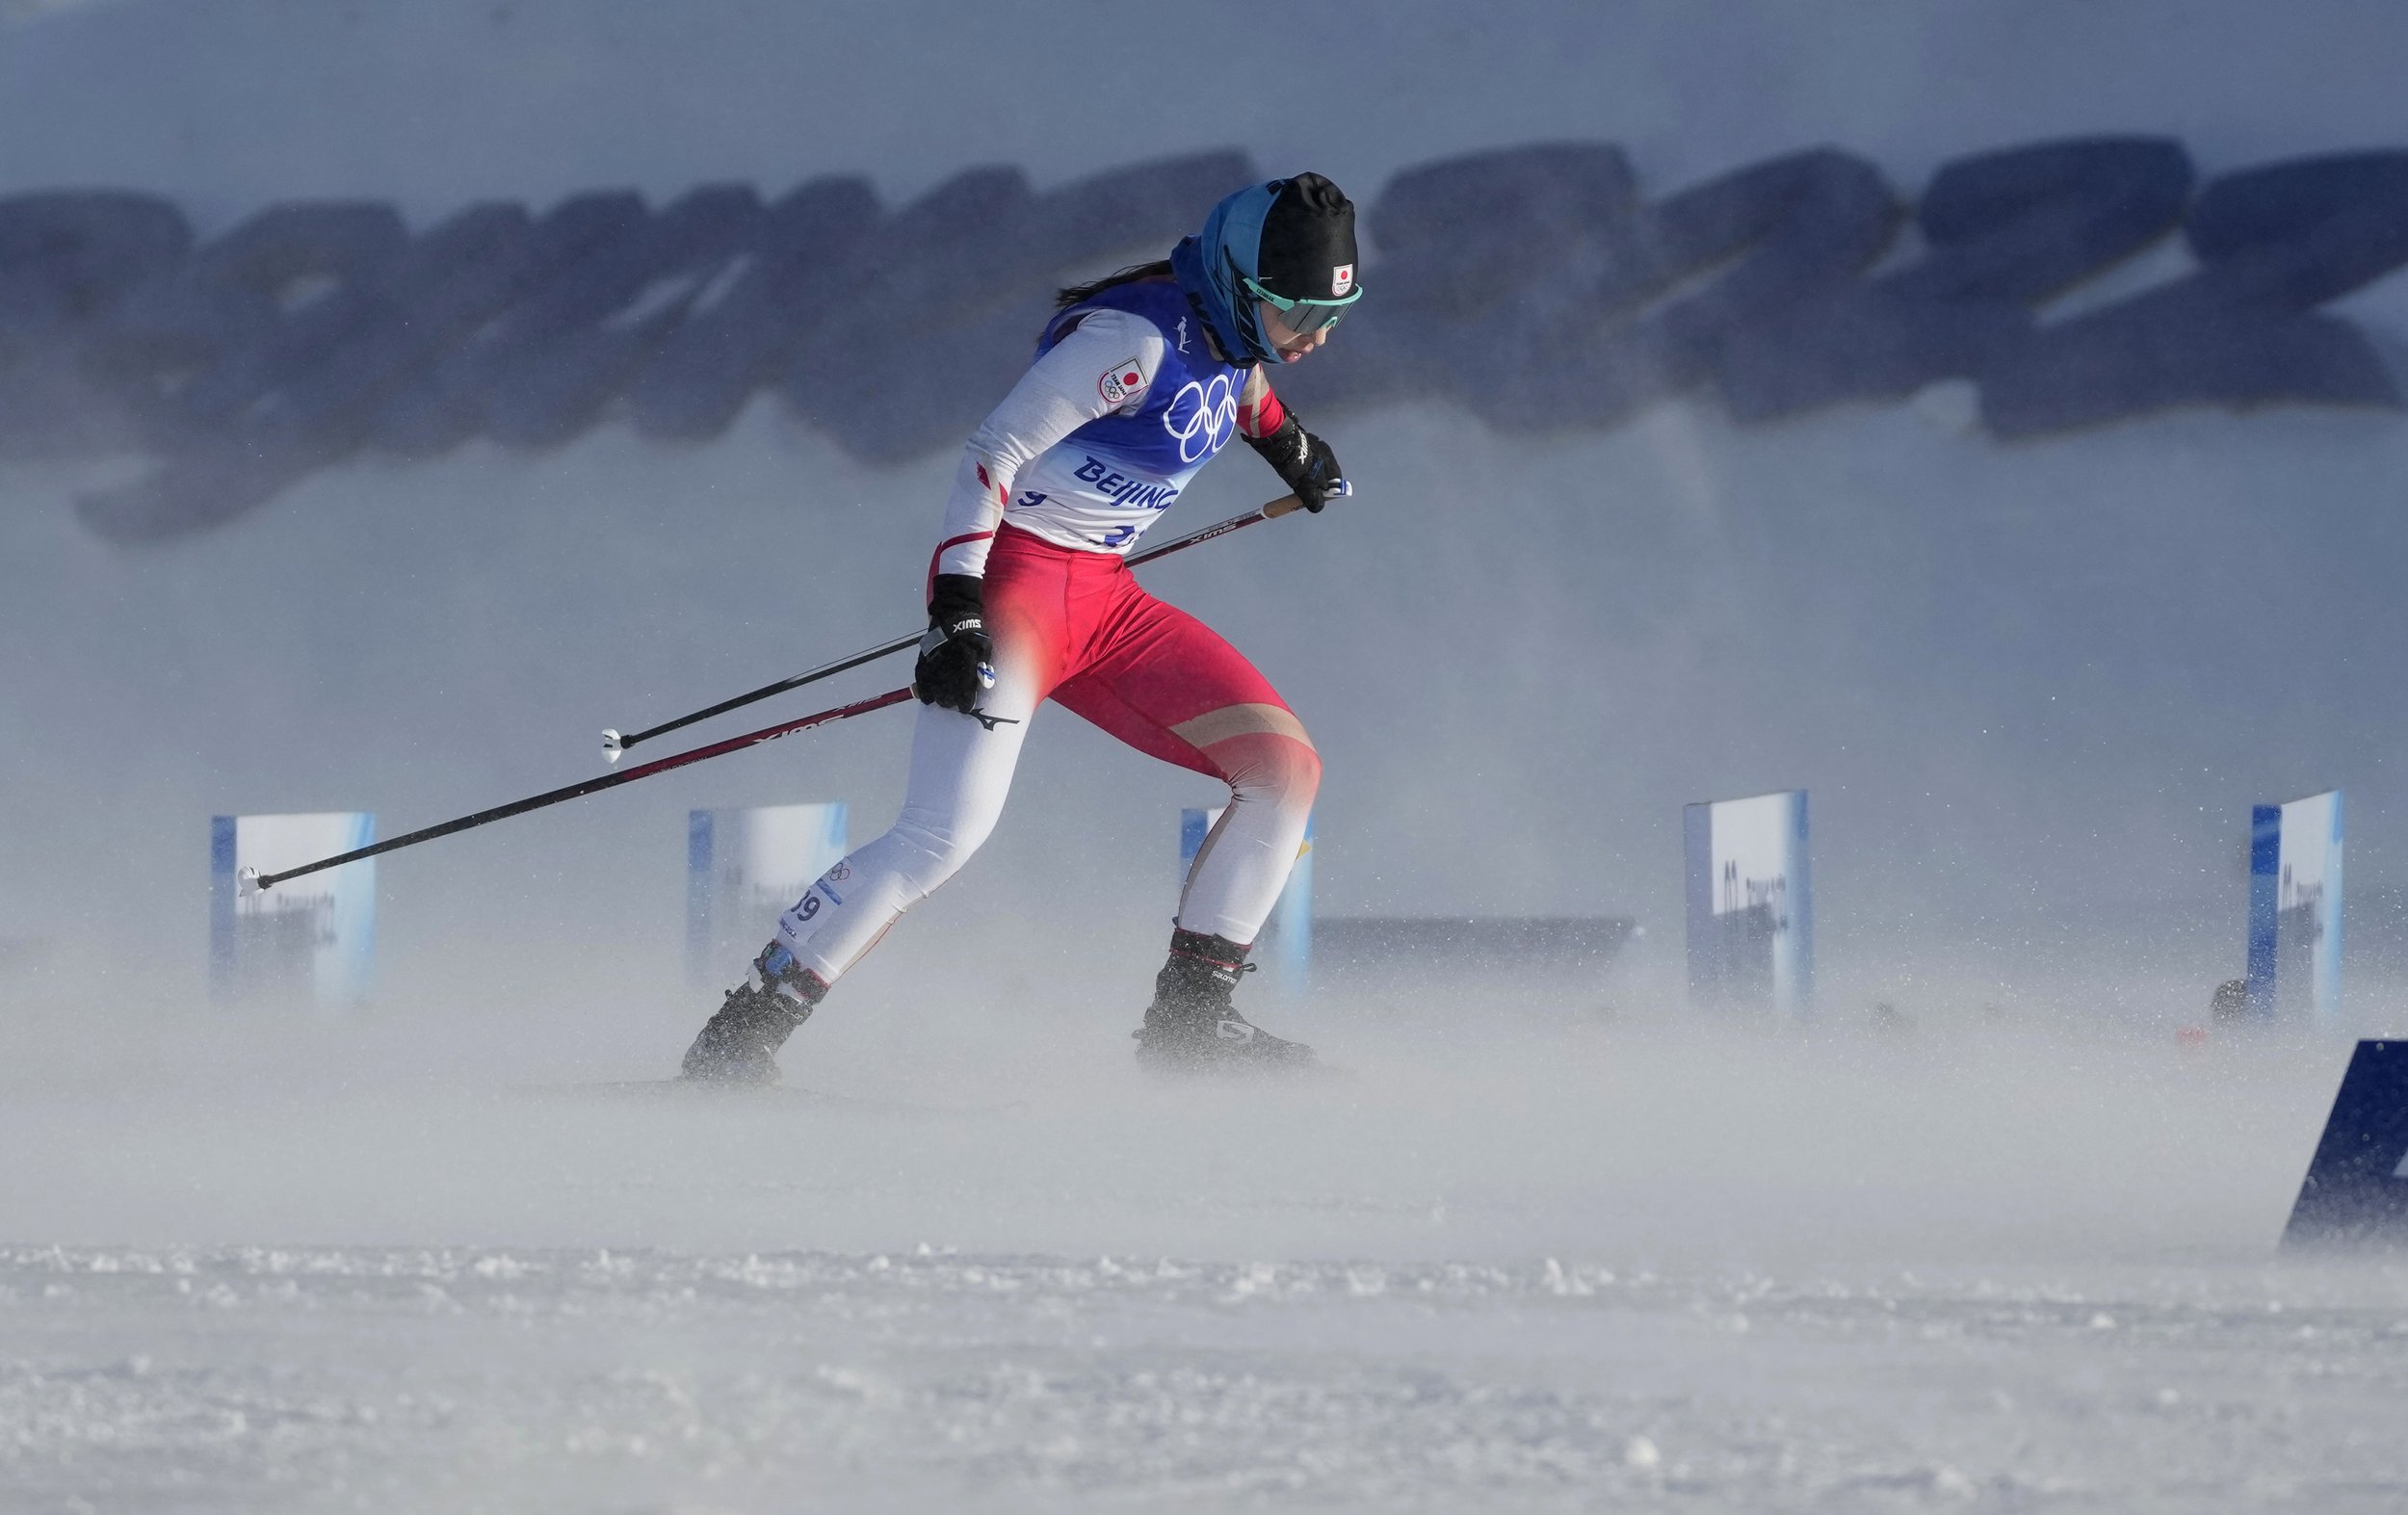  Japan's Masae Tsuchiya competes during the women's 7.5km + 7.5km skiathlon cross-country skiing competition at the 2022 Winter Olympics, Saturday, Feb. 5, 2022, in Zhangjiakou, China. (AP Photo/Aaron Favila) 